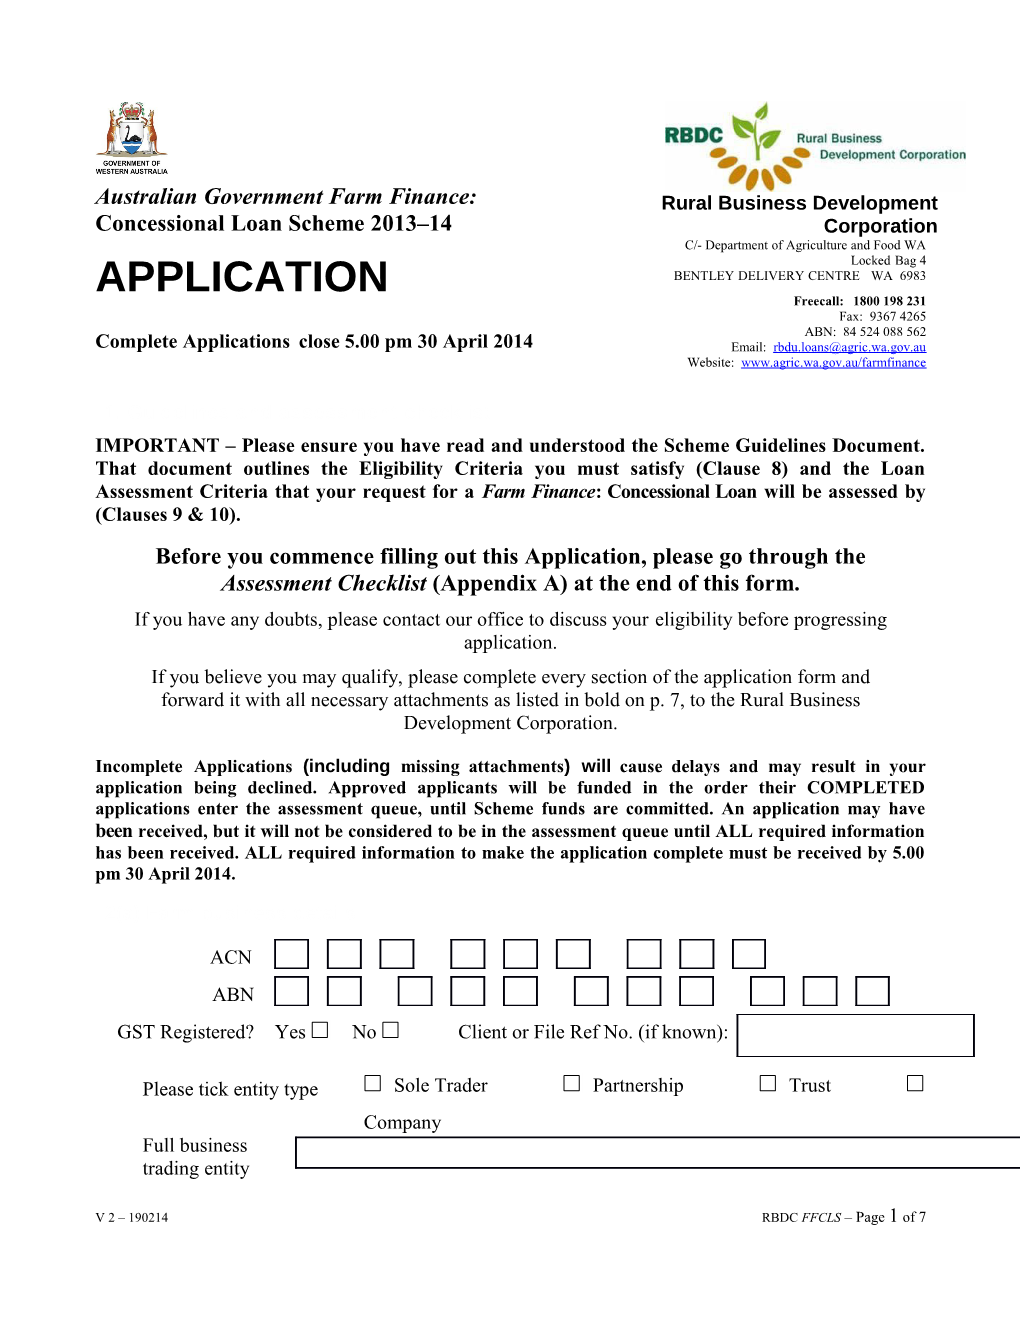 Complete Applicationsclose 5.00Pm 30April2014